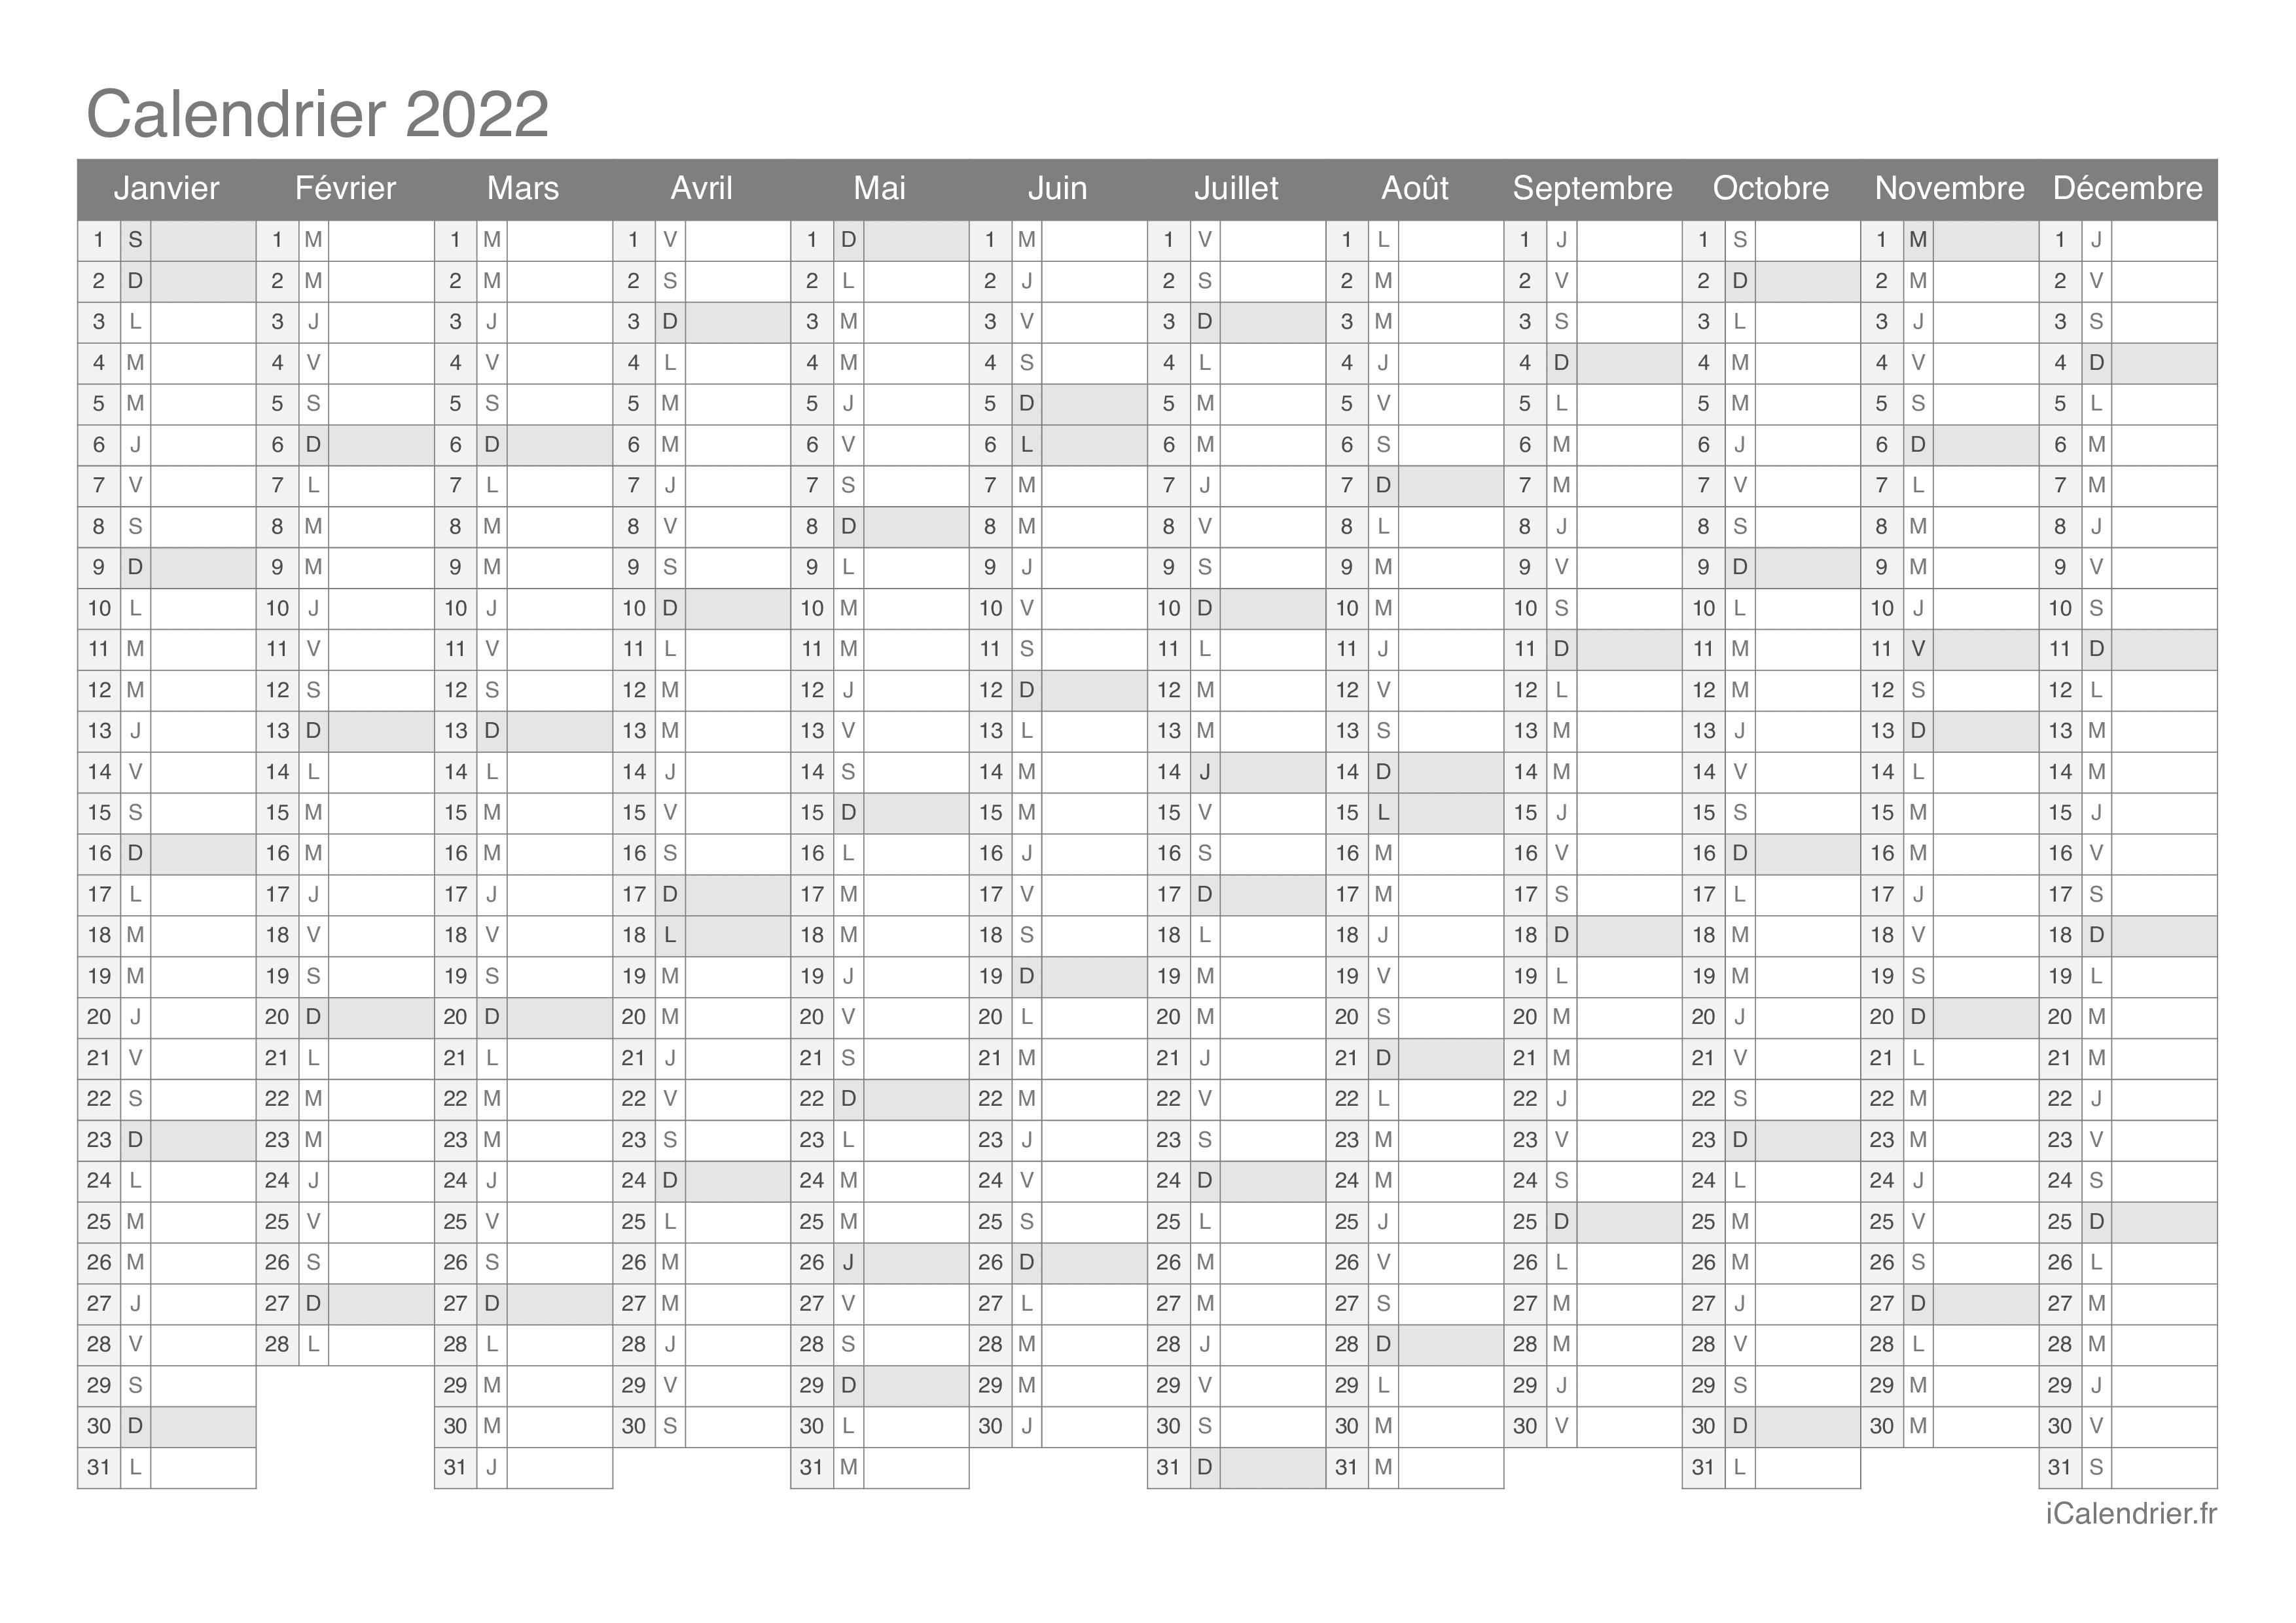 Calendrier 2022 Icalendrier Calendrier 2022 à imprimer PDF et Excel   iCalendrier